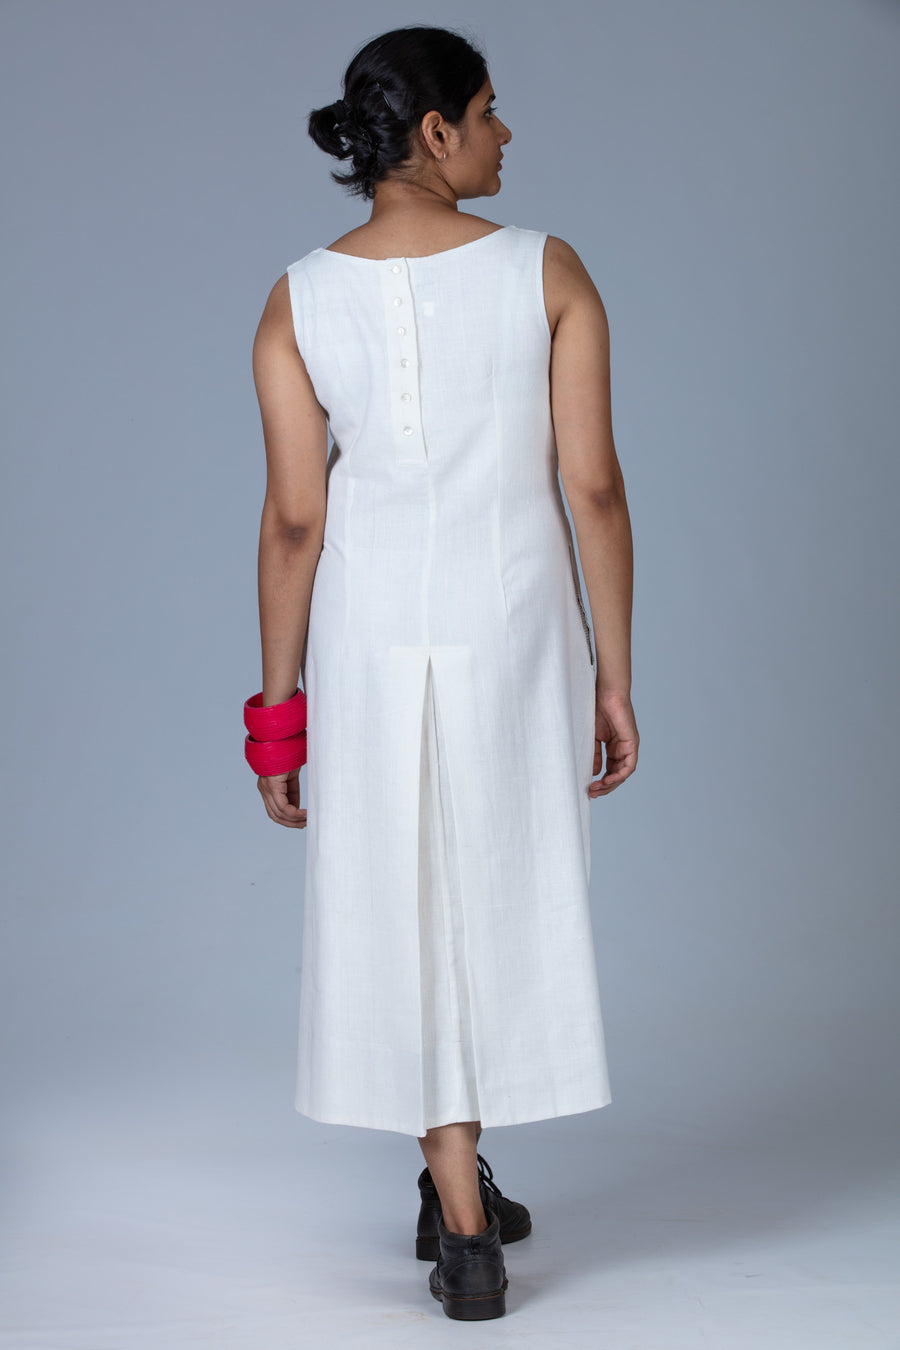 White Khadi Dress - NIKITA - Upasana Design Studio